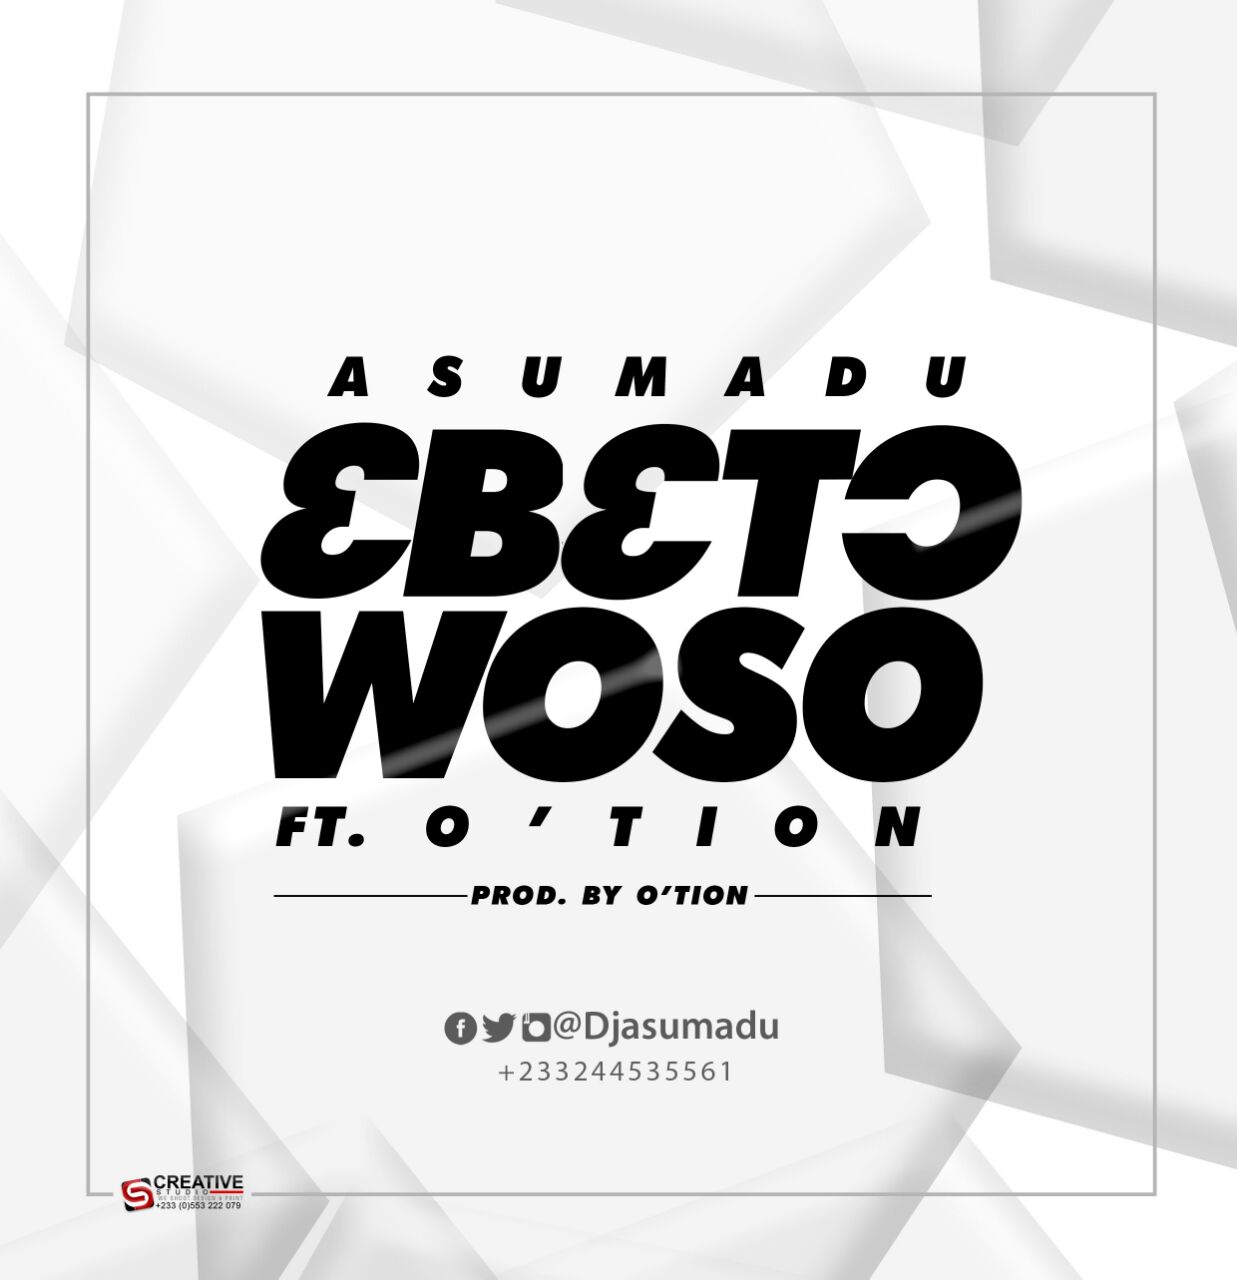 Asumadu - 3b3to Woso ft O'tion (Prod. By O'tion)